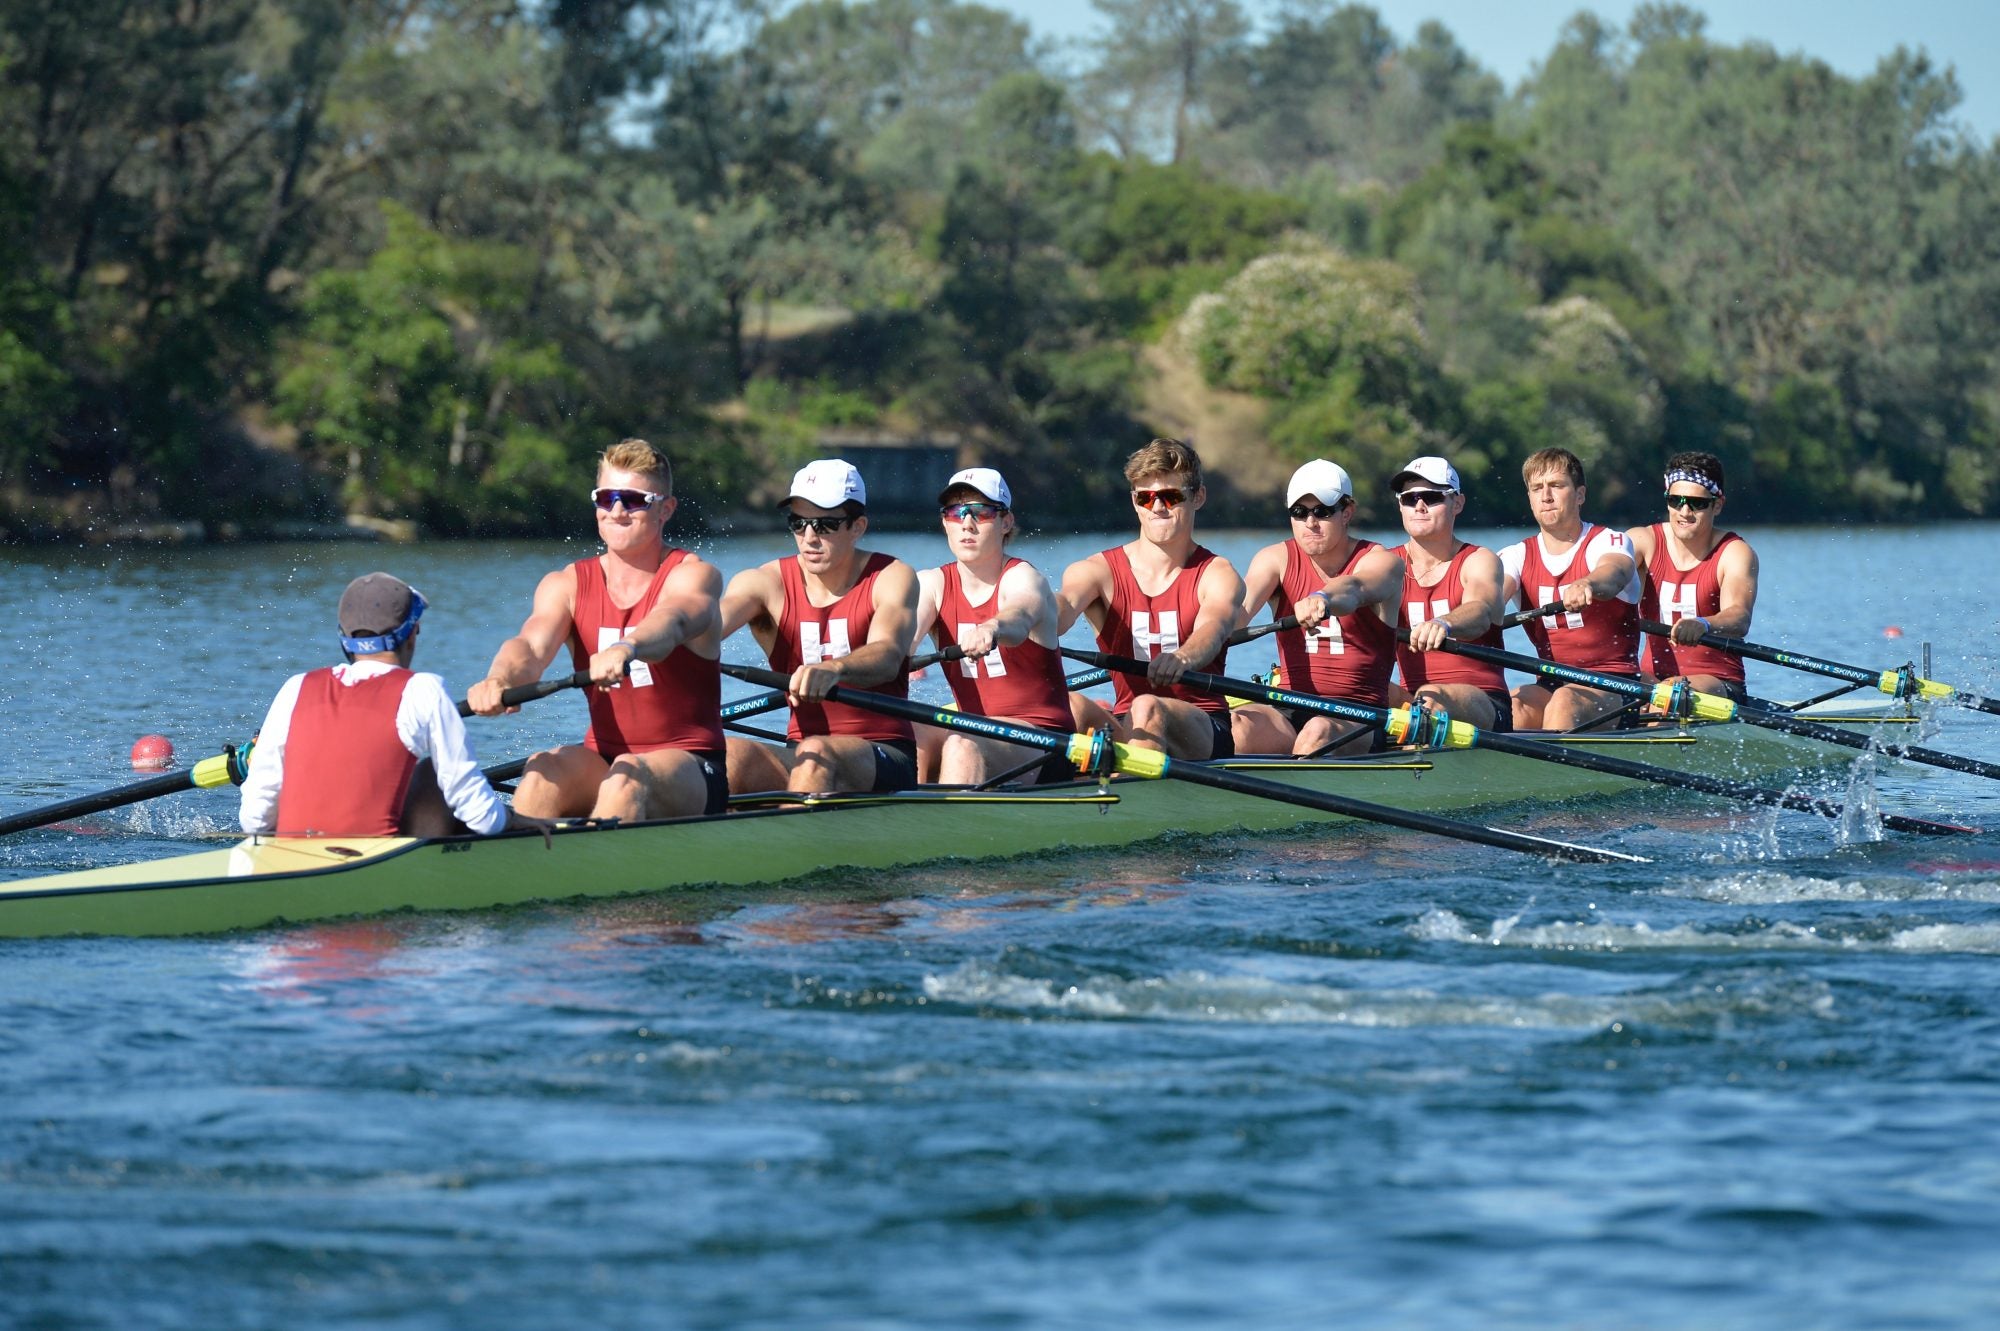 Harvard students rowing crew